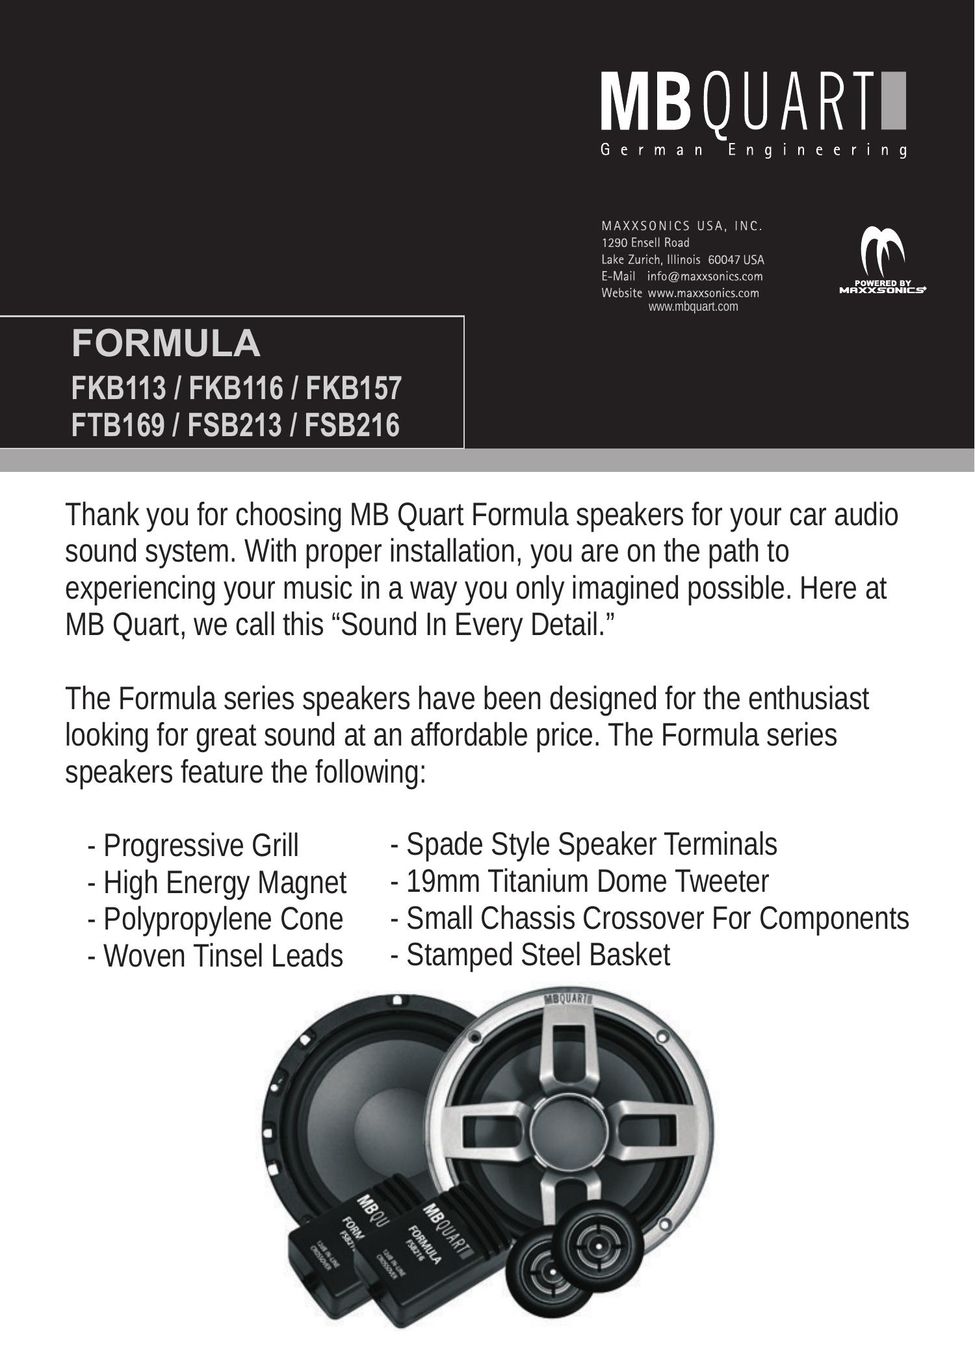 MB QUART FTB169 Car Speaker User Manual